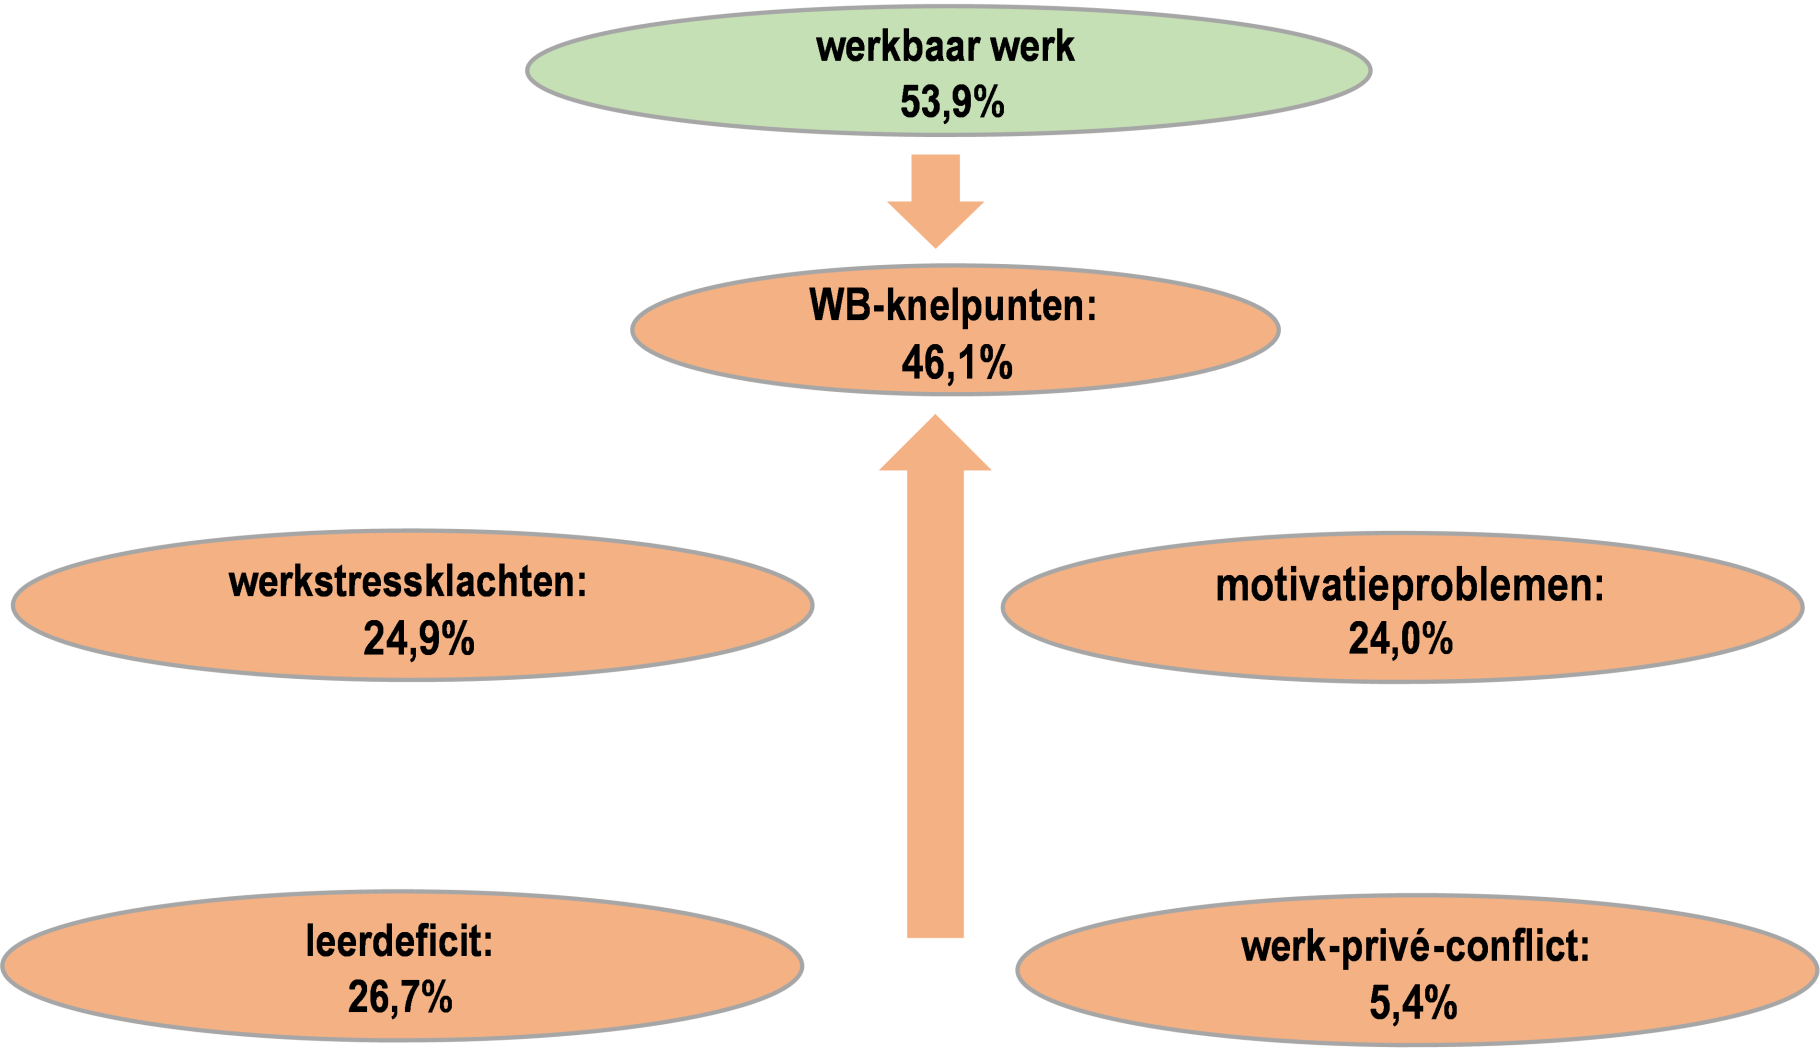 Werkbaarheidsprofiel arbeiders uit de hout- en meubelindustrie (2021)